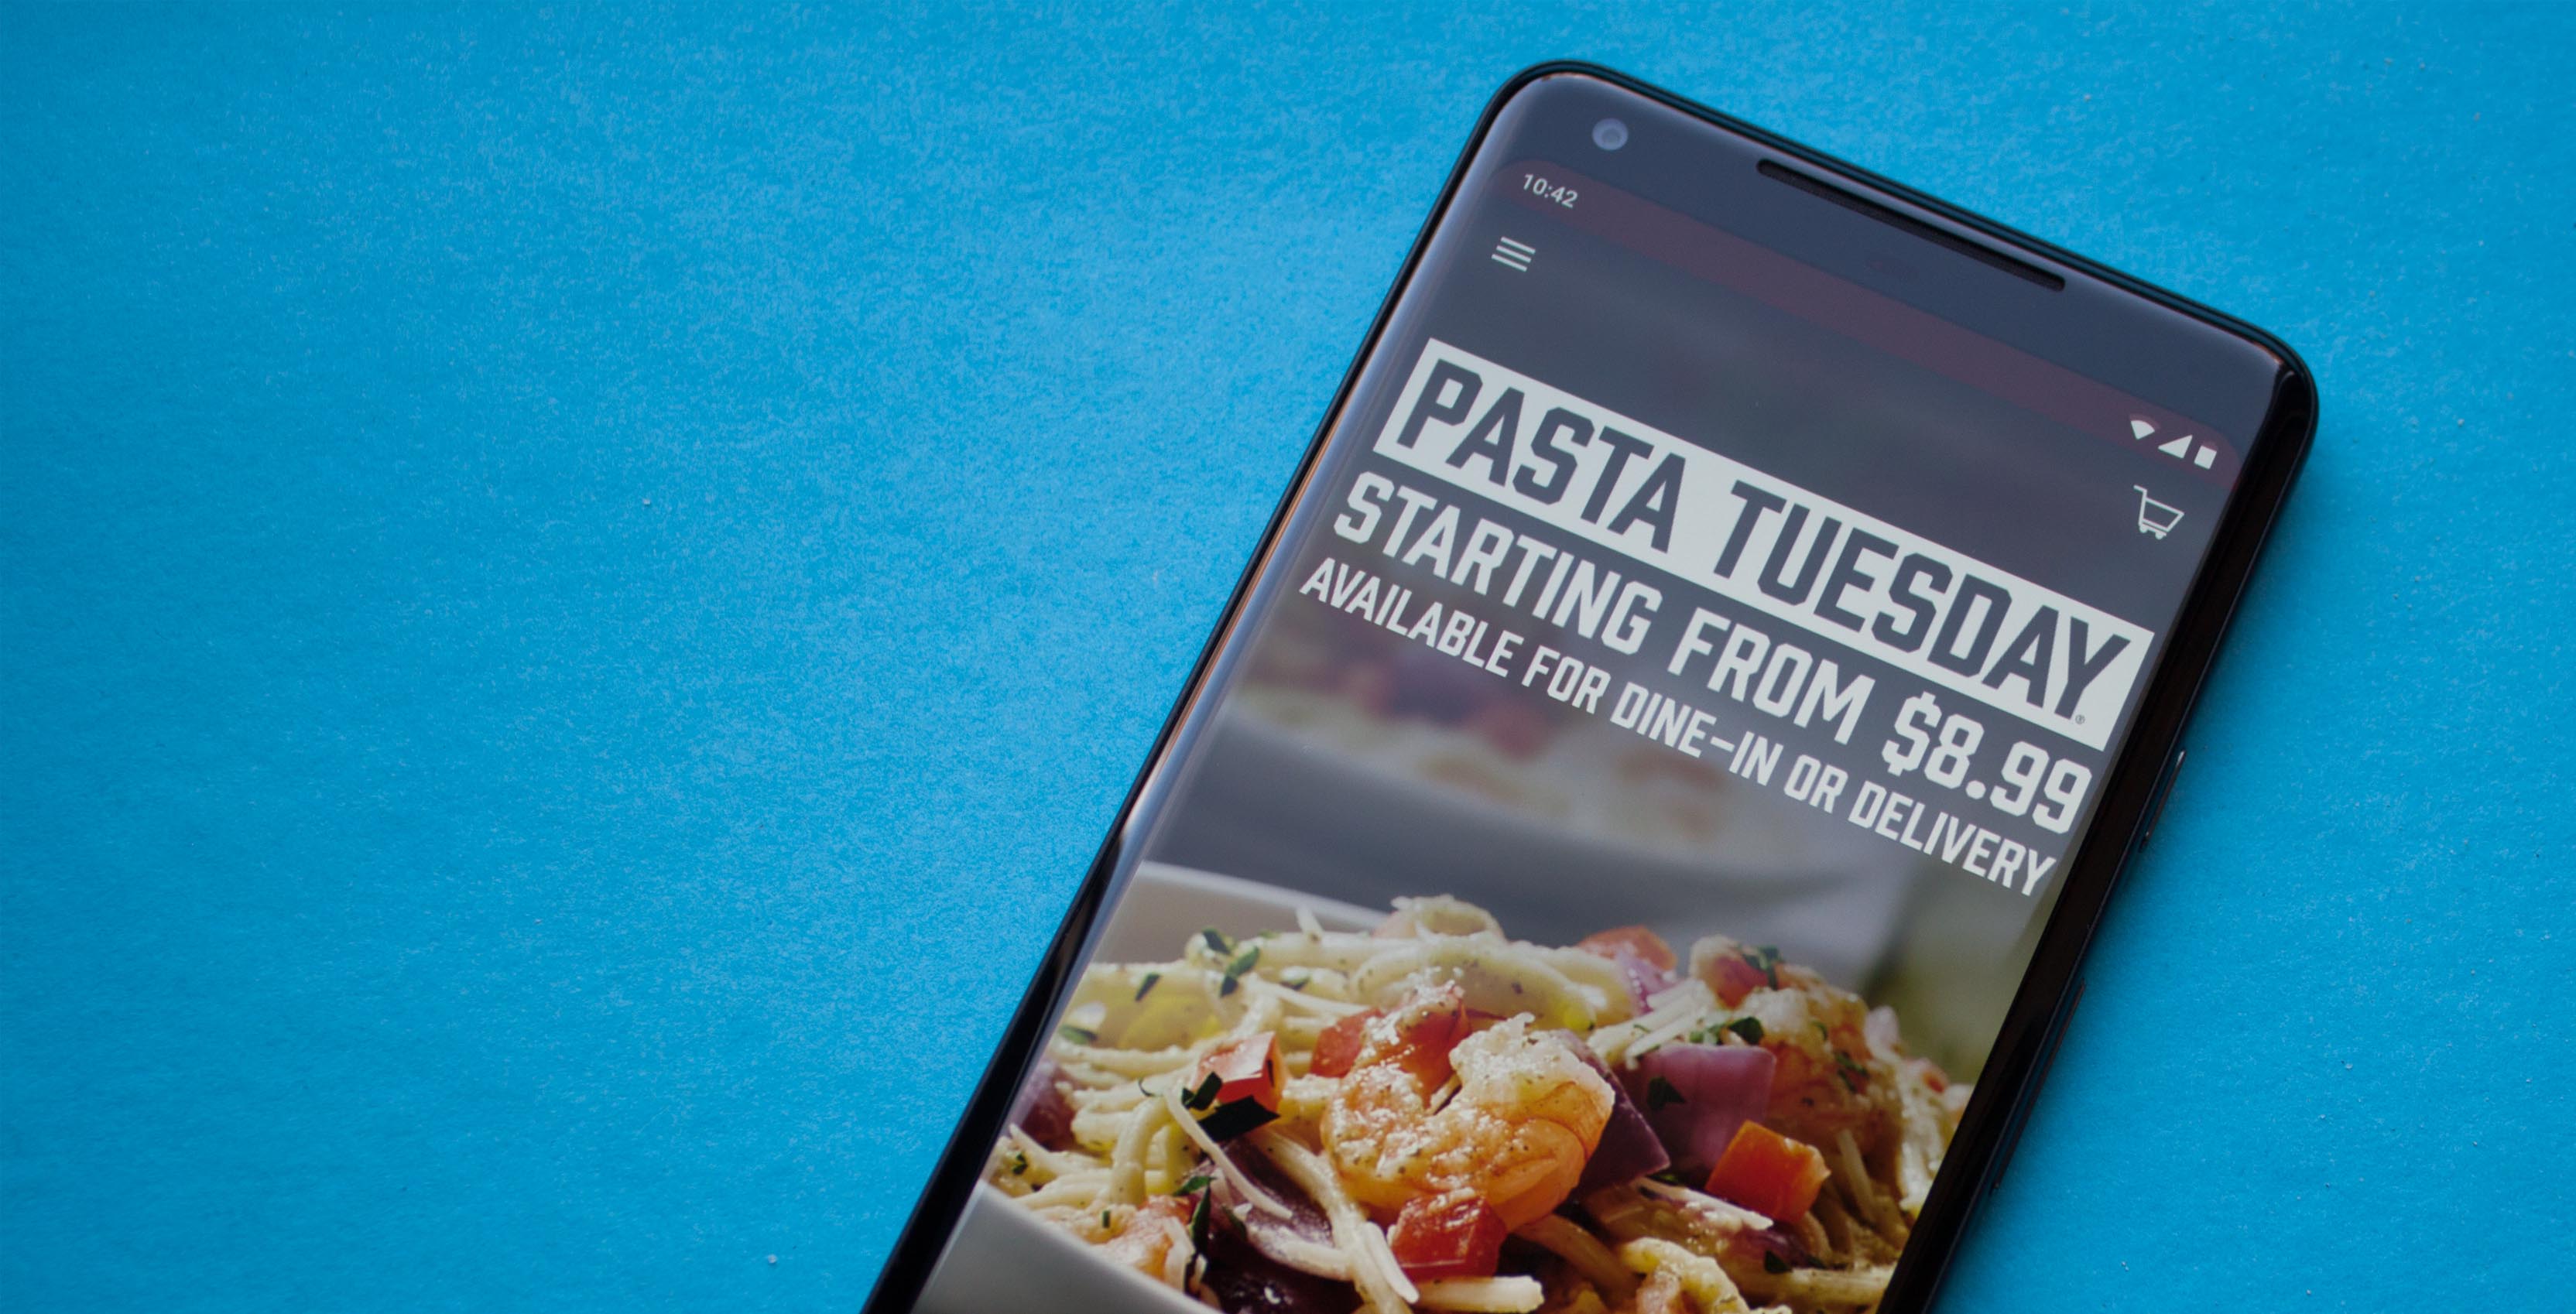 Boston Pizza smart phone application